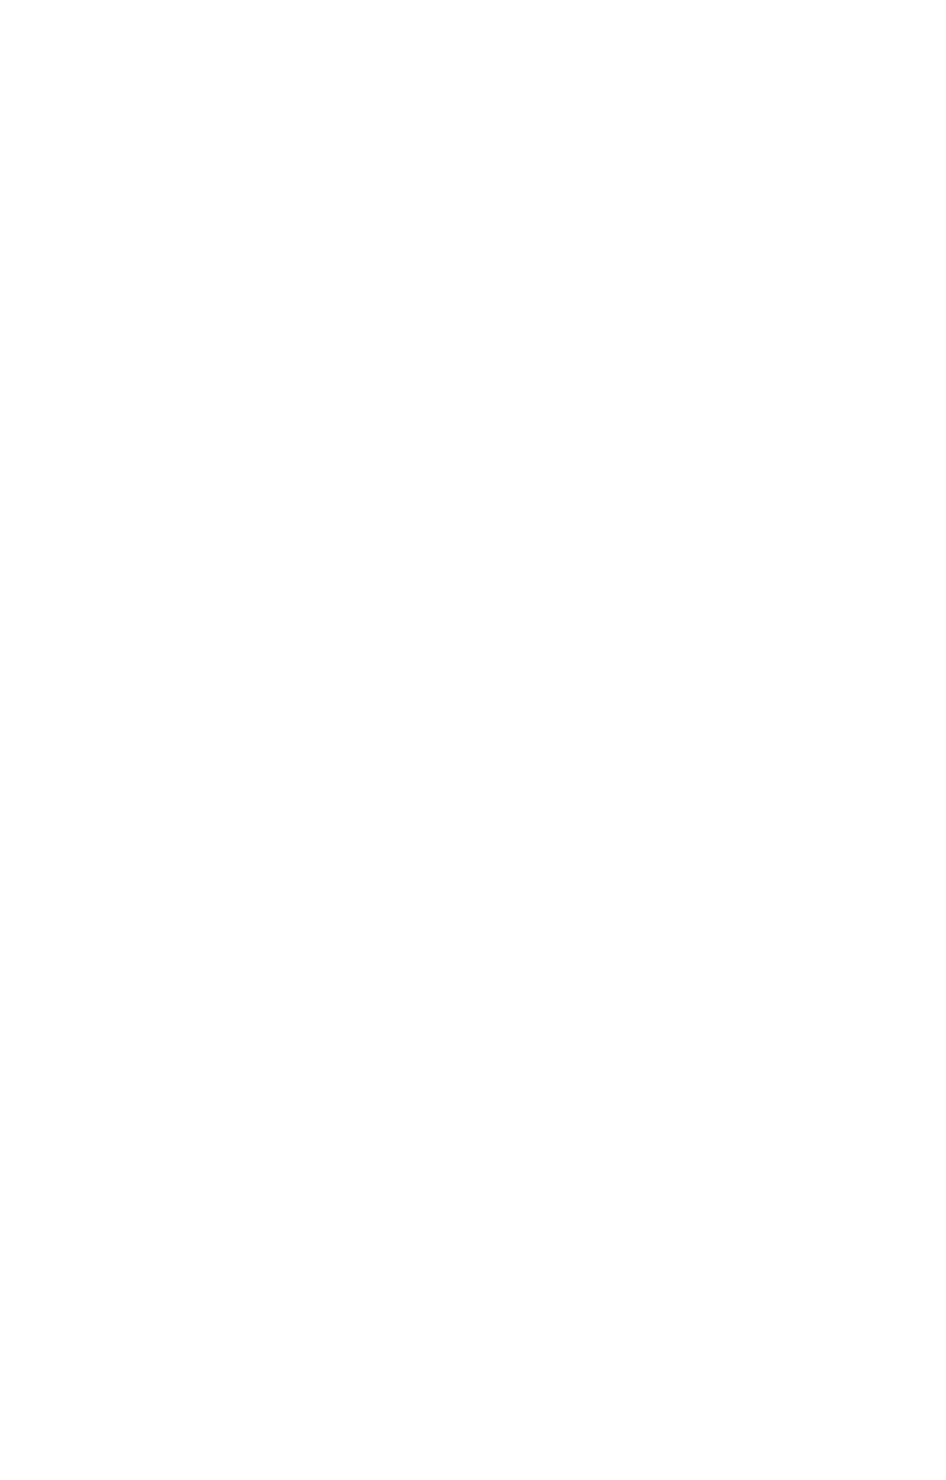 Northern Foot & Ankle Associates - Podiatric Medicine & Surgery